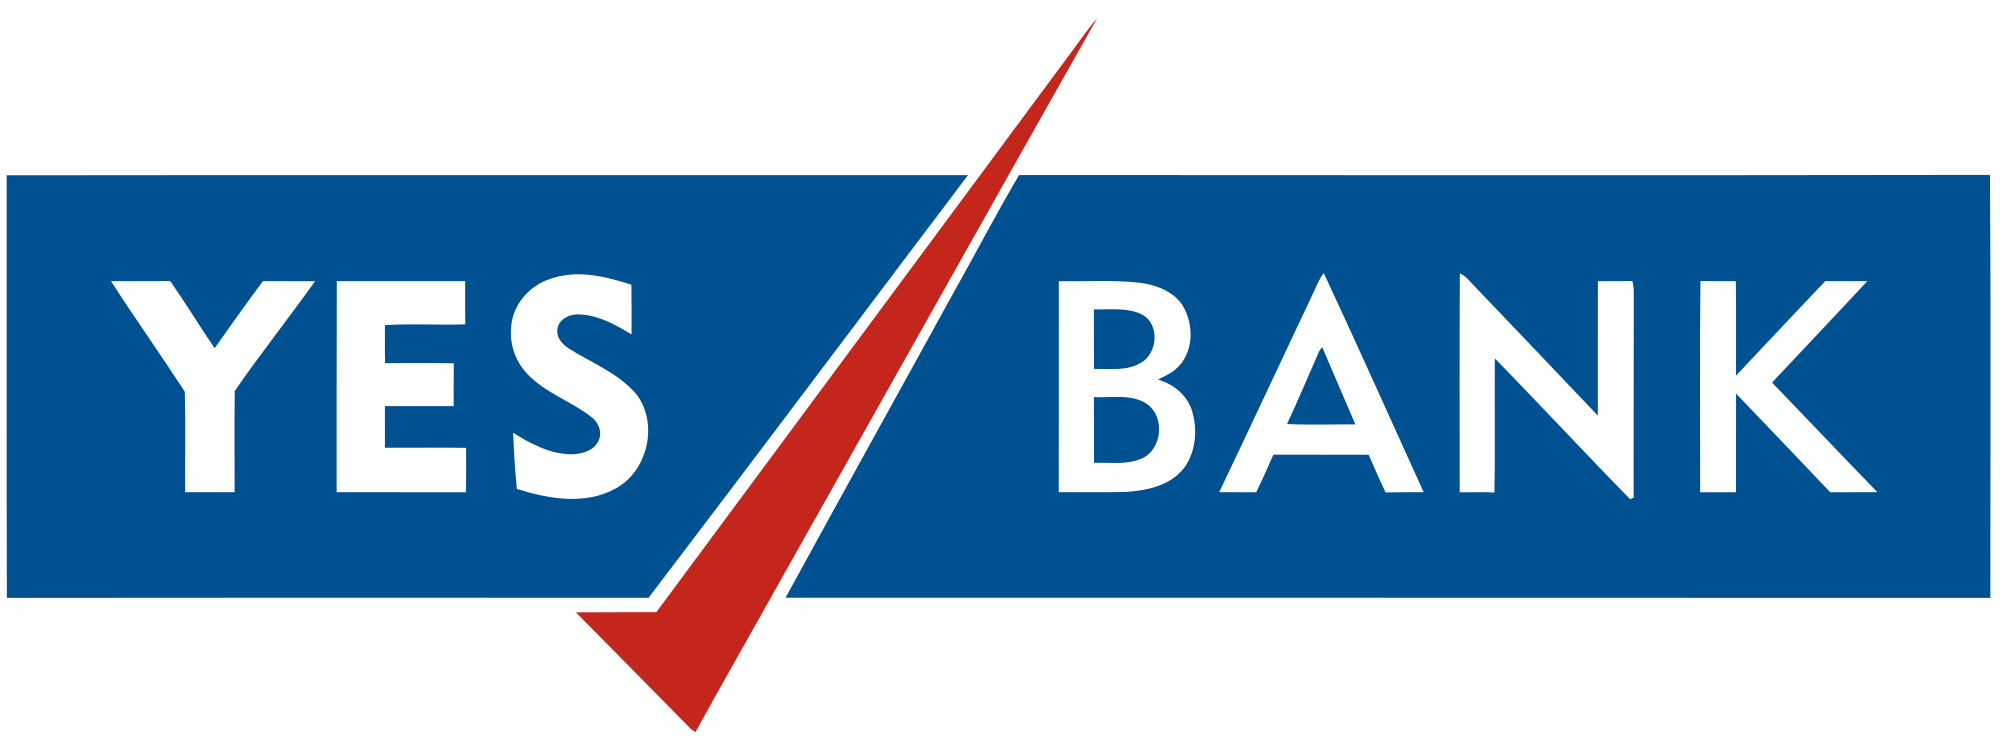 Bank Logo - File:Yes Bank SVG Logo.svg - Wikimedia Commons